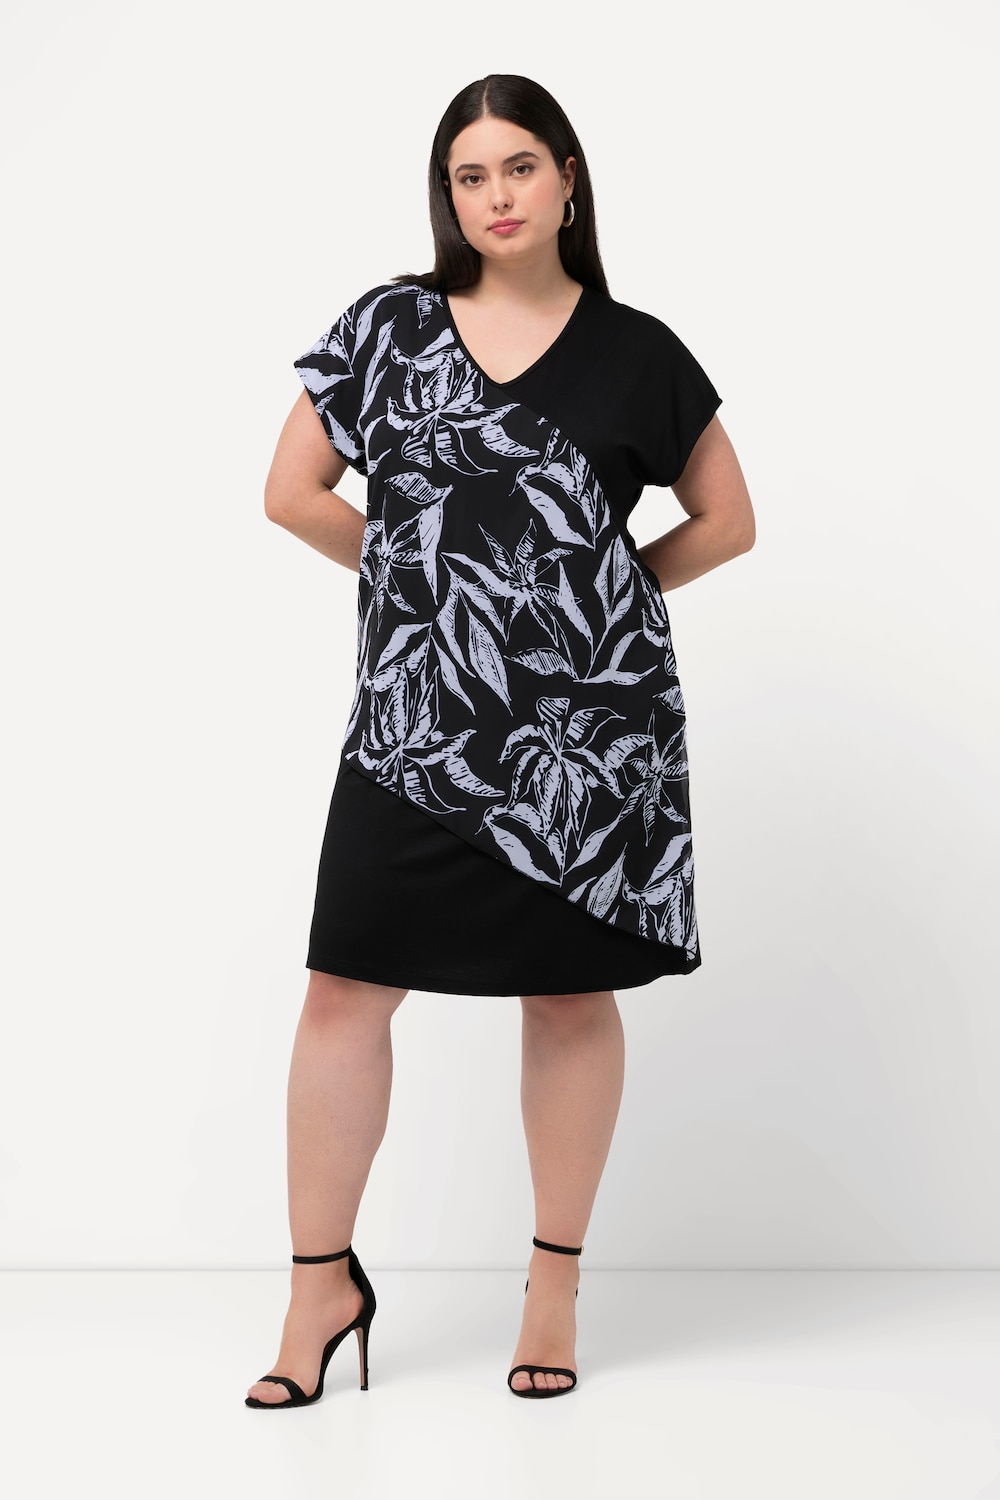 Grote Maten Jersey jurk, Dames, zwart, Maat: 42/44, Polyester/Viscose, Ulla Popken